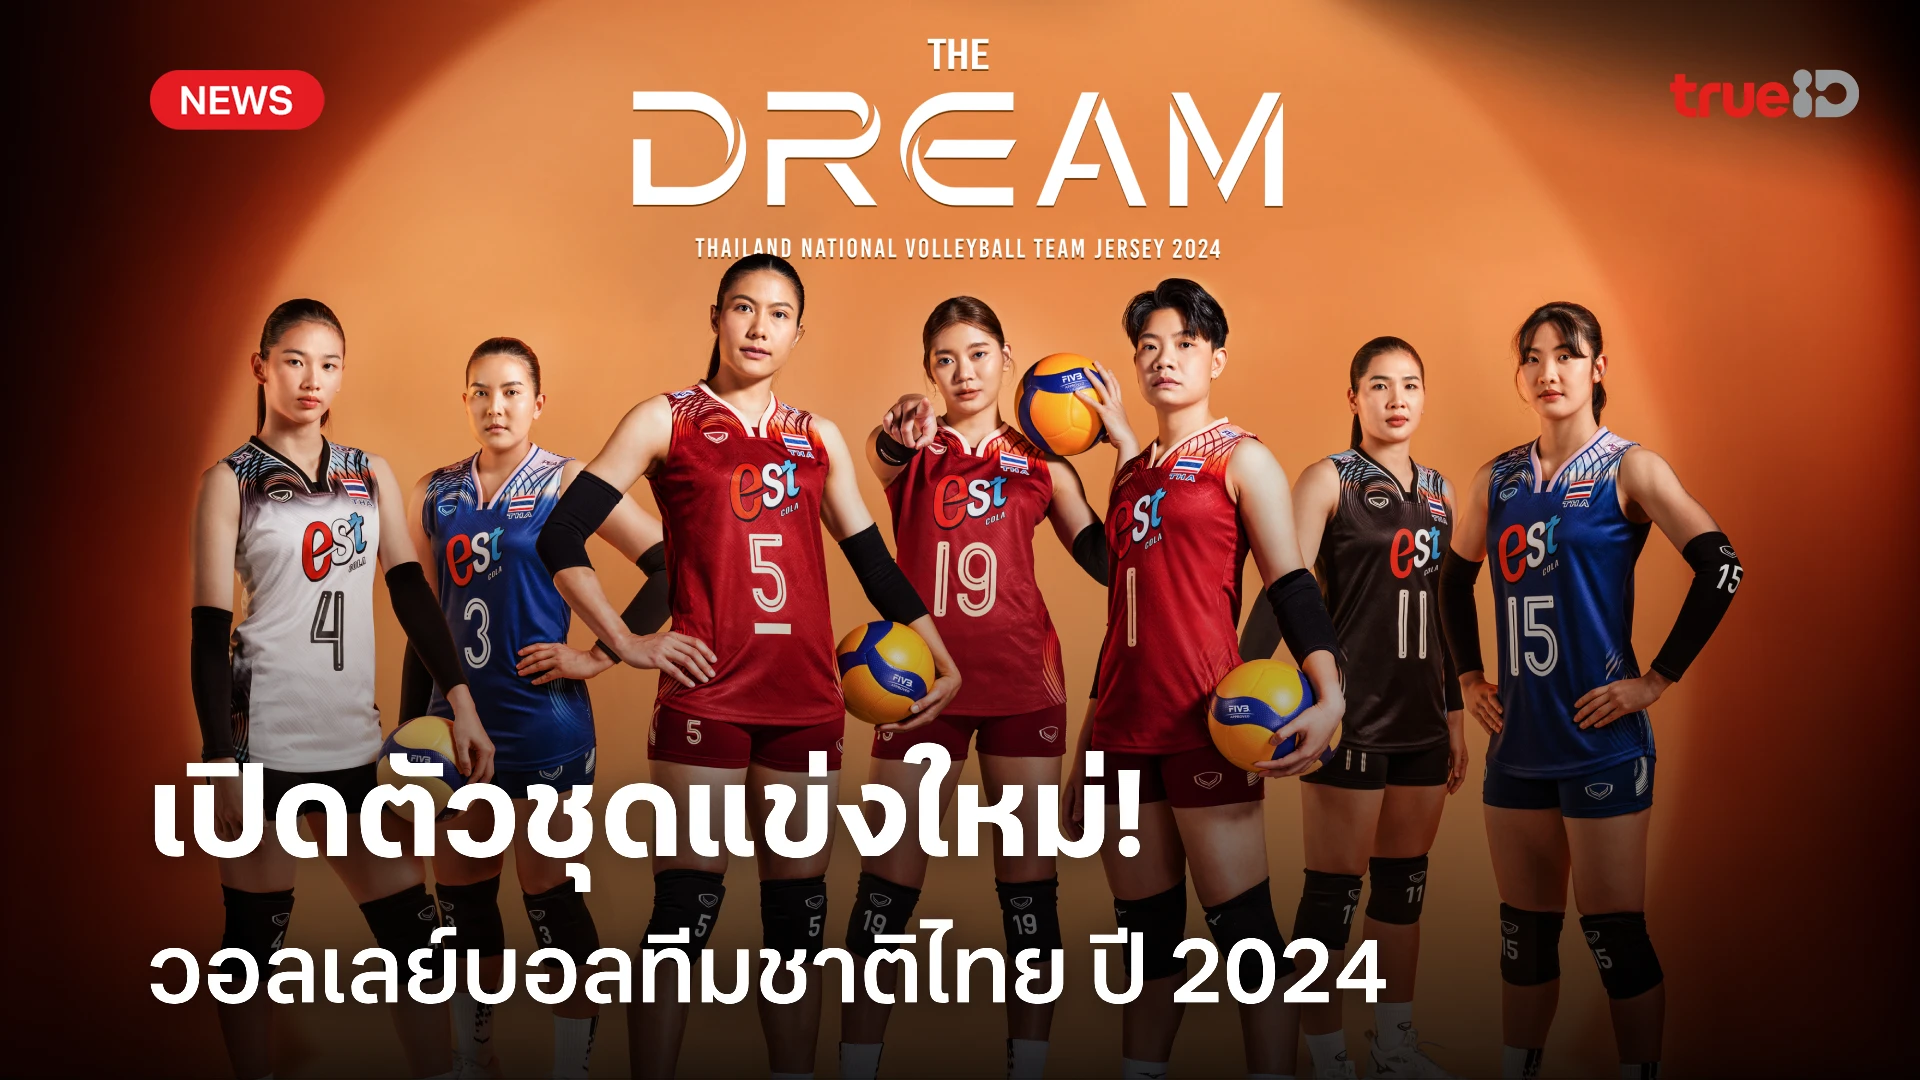 THE DREAM : 'แกรนด์สปอร์ต' เปิดตัวชุดแข่ง วอลเลย์บอลทีมชาติไทย ปี 2024